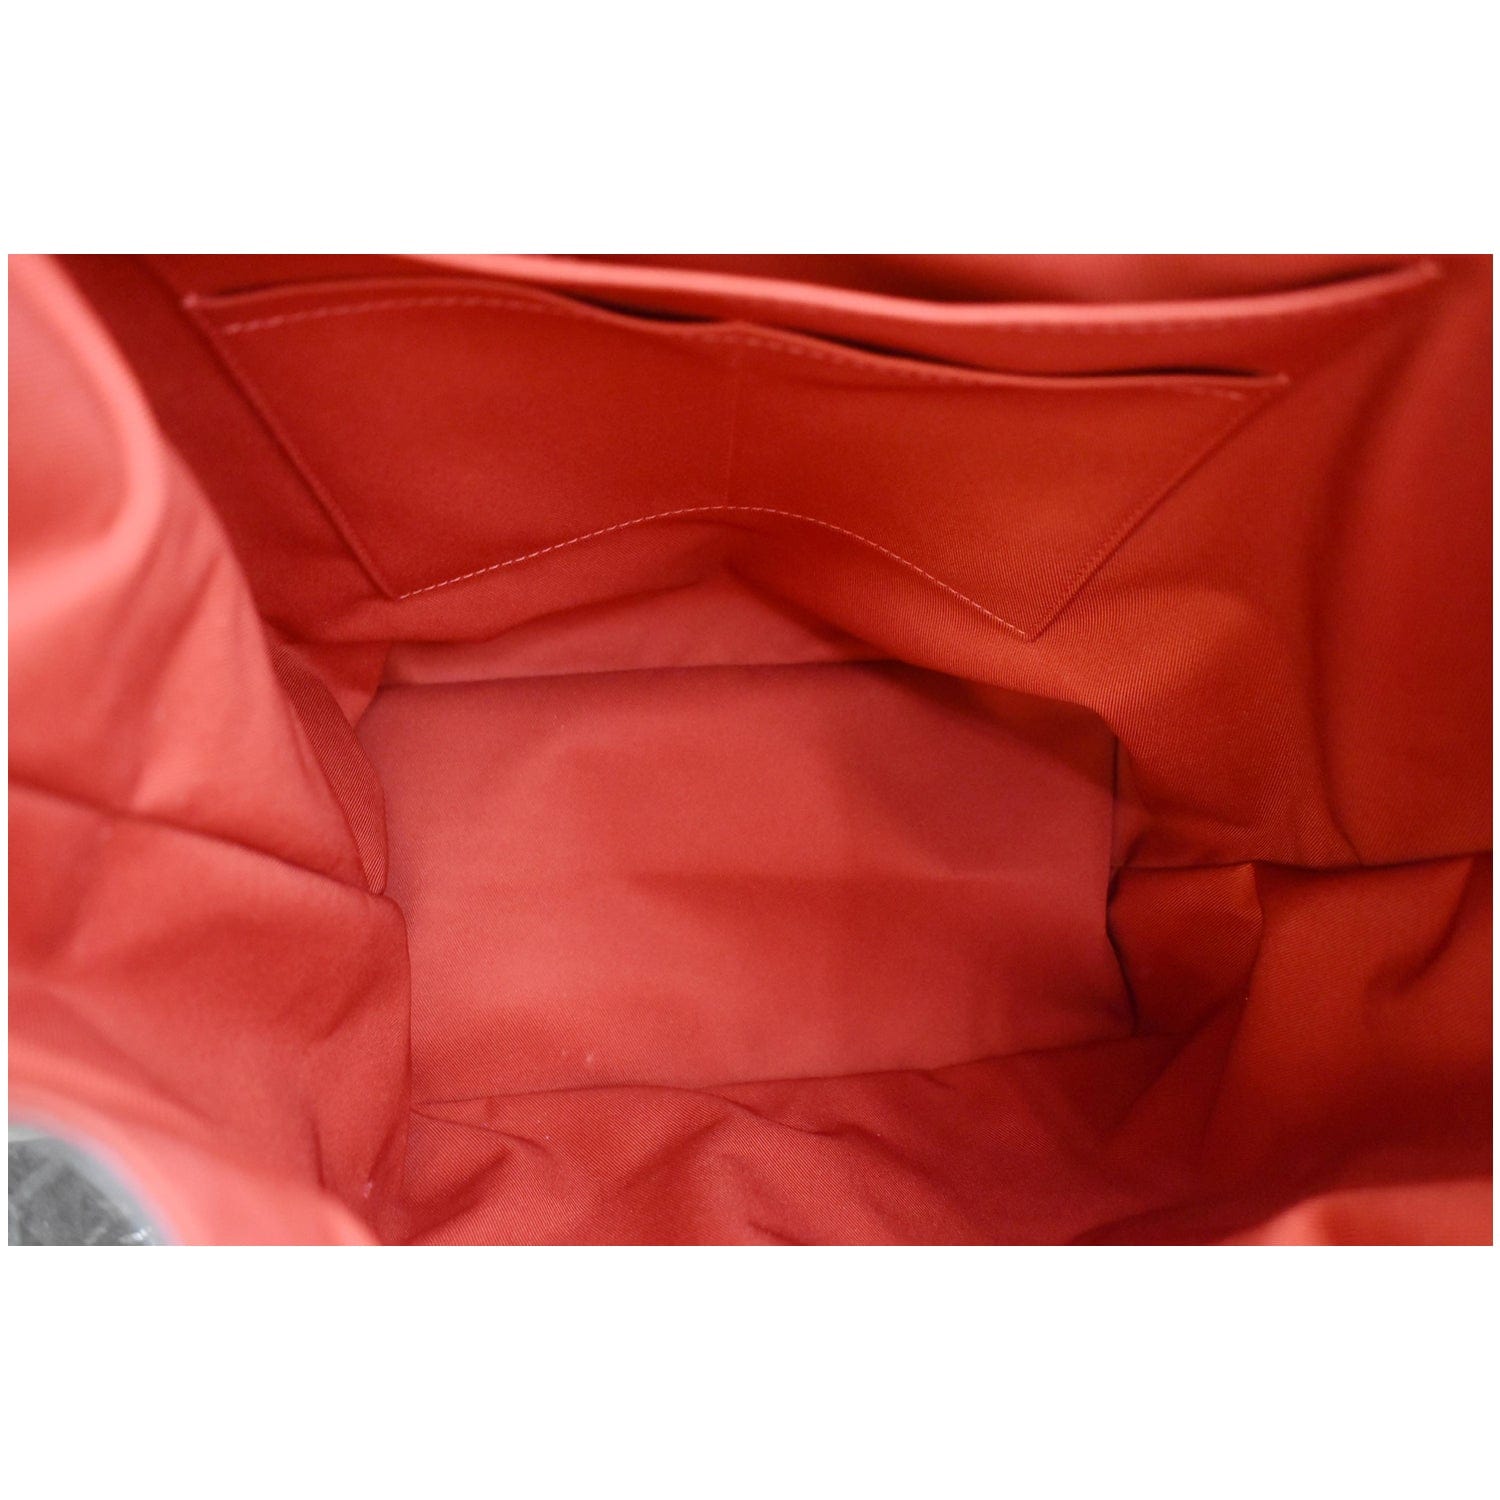 LV LOUIS VUITTON Utility Damier Graphite Backpack, New Authentic w/ paper  bag